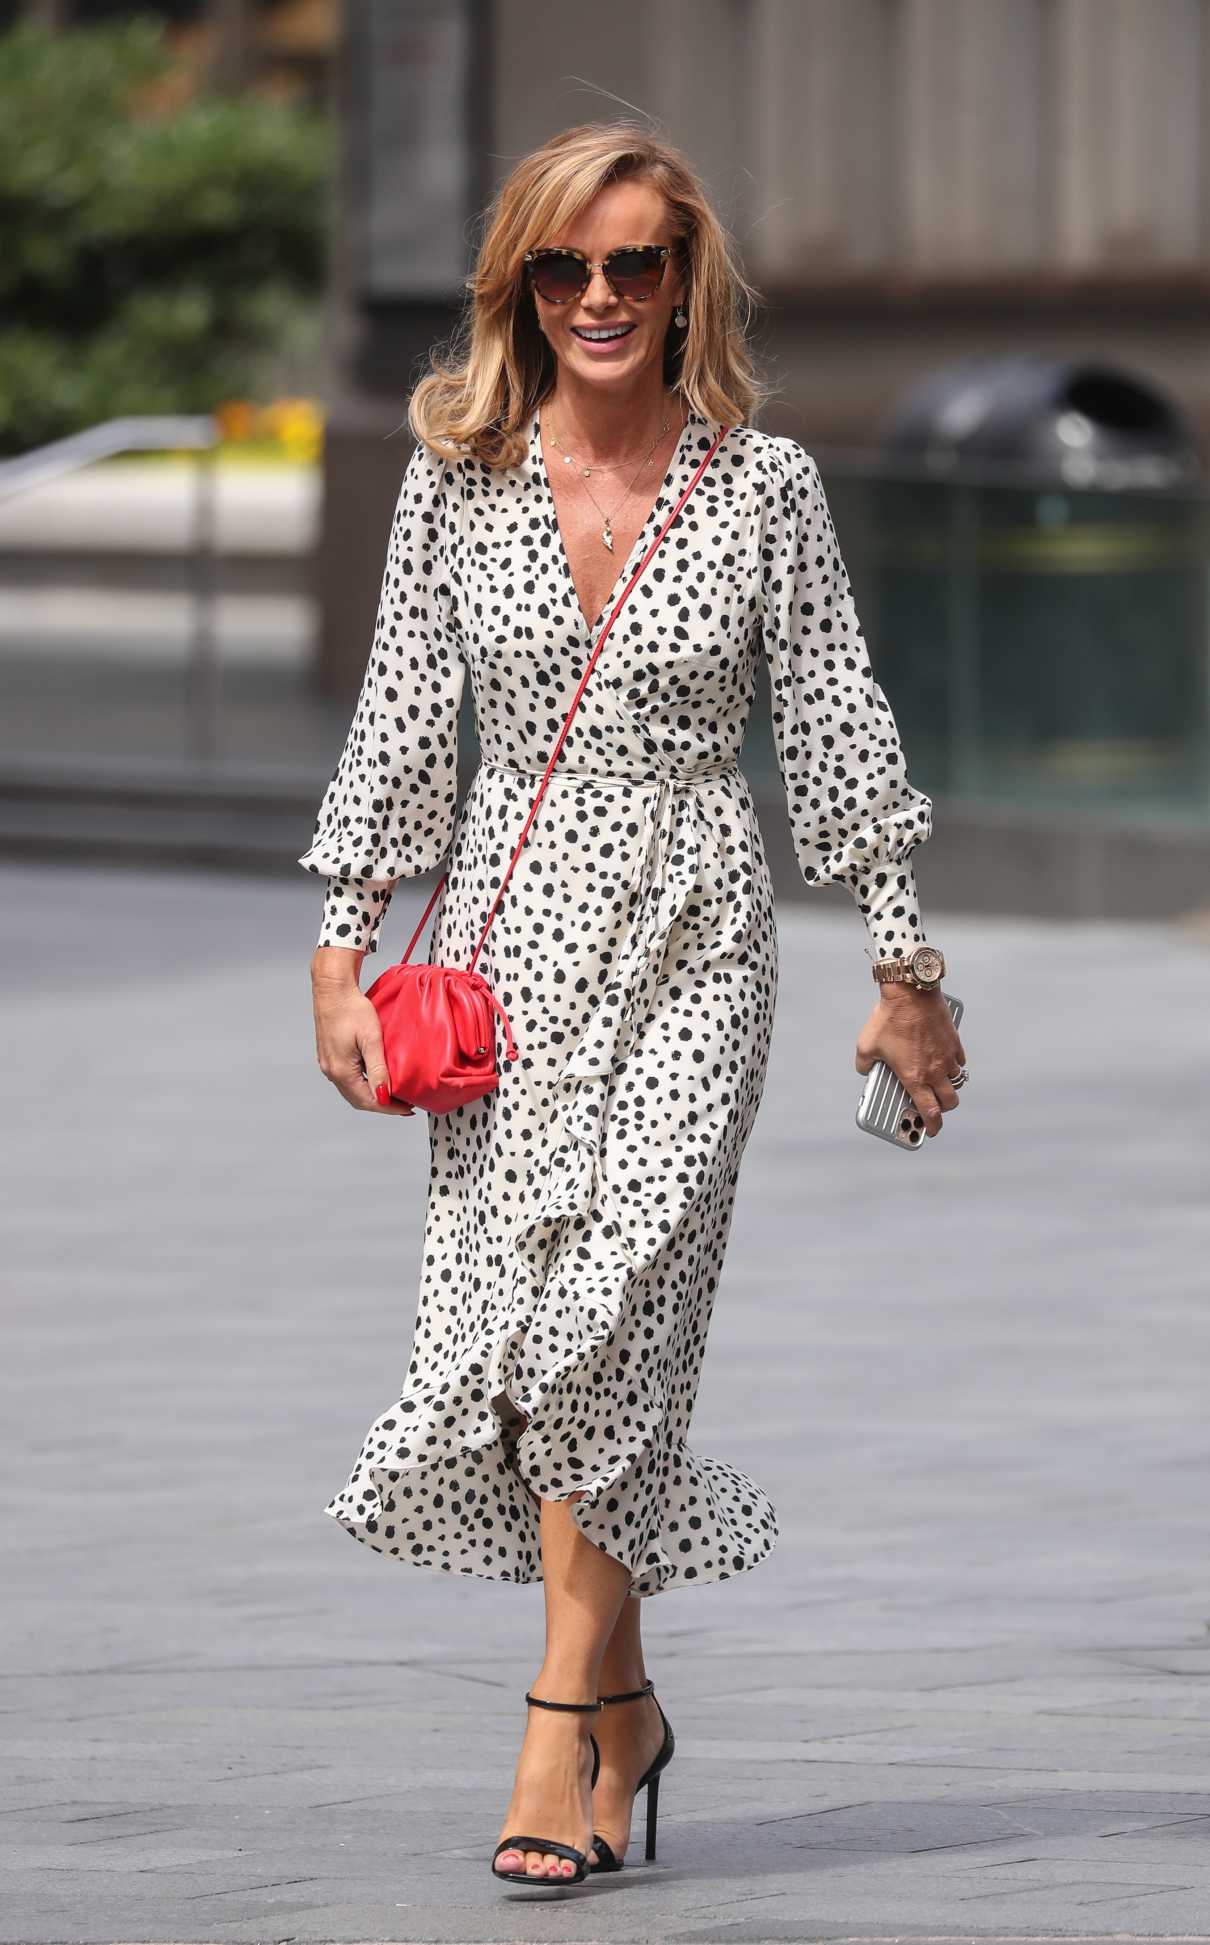 Amanda Holden in a Polka Dot Dress Leaves the Heart Radio in London 07 ...